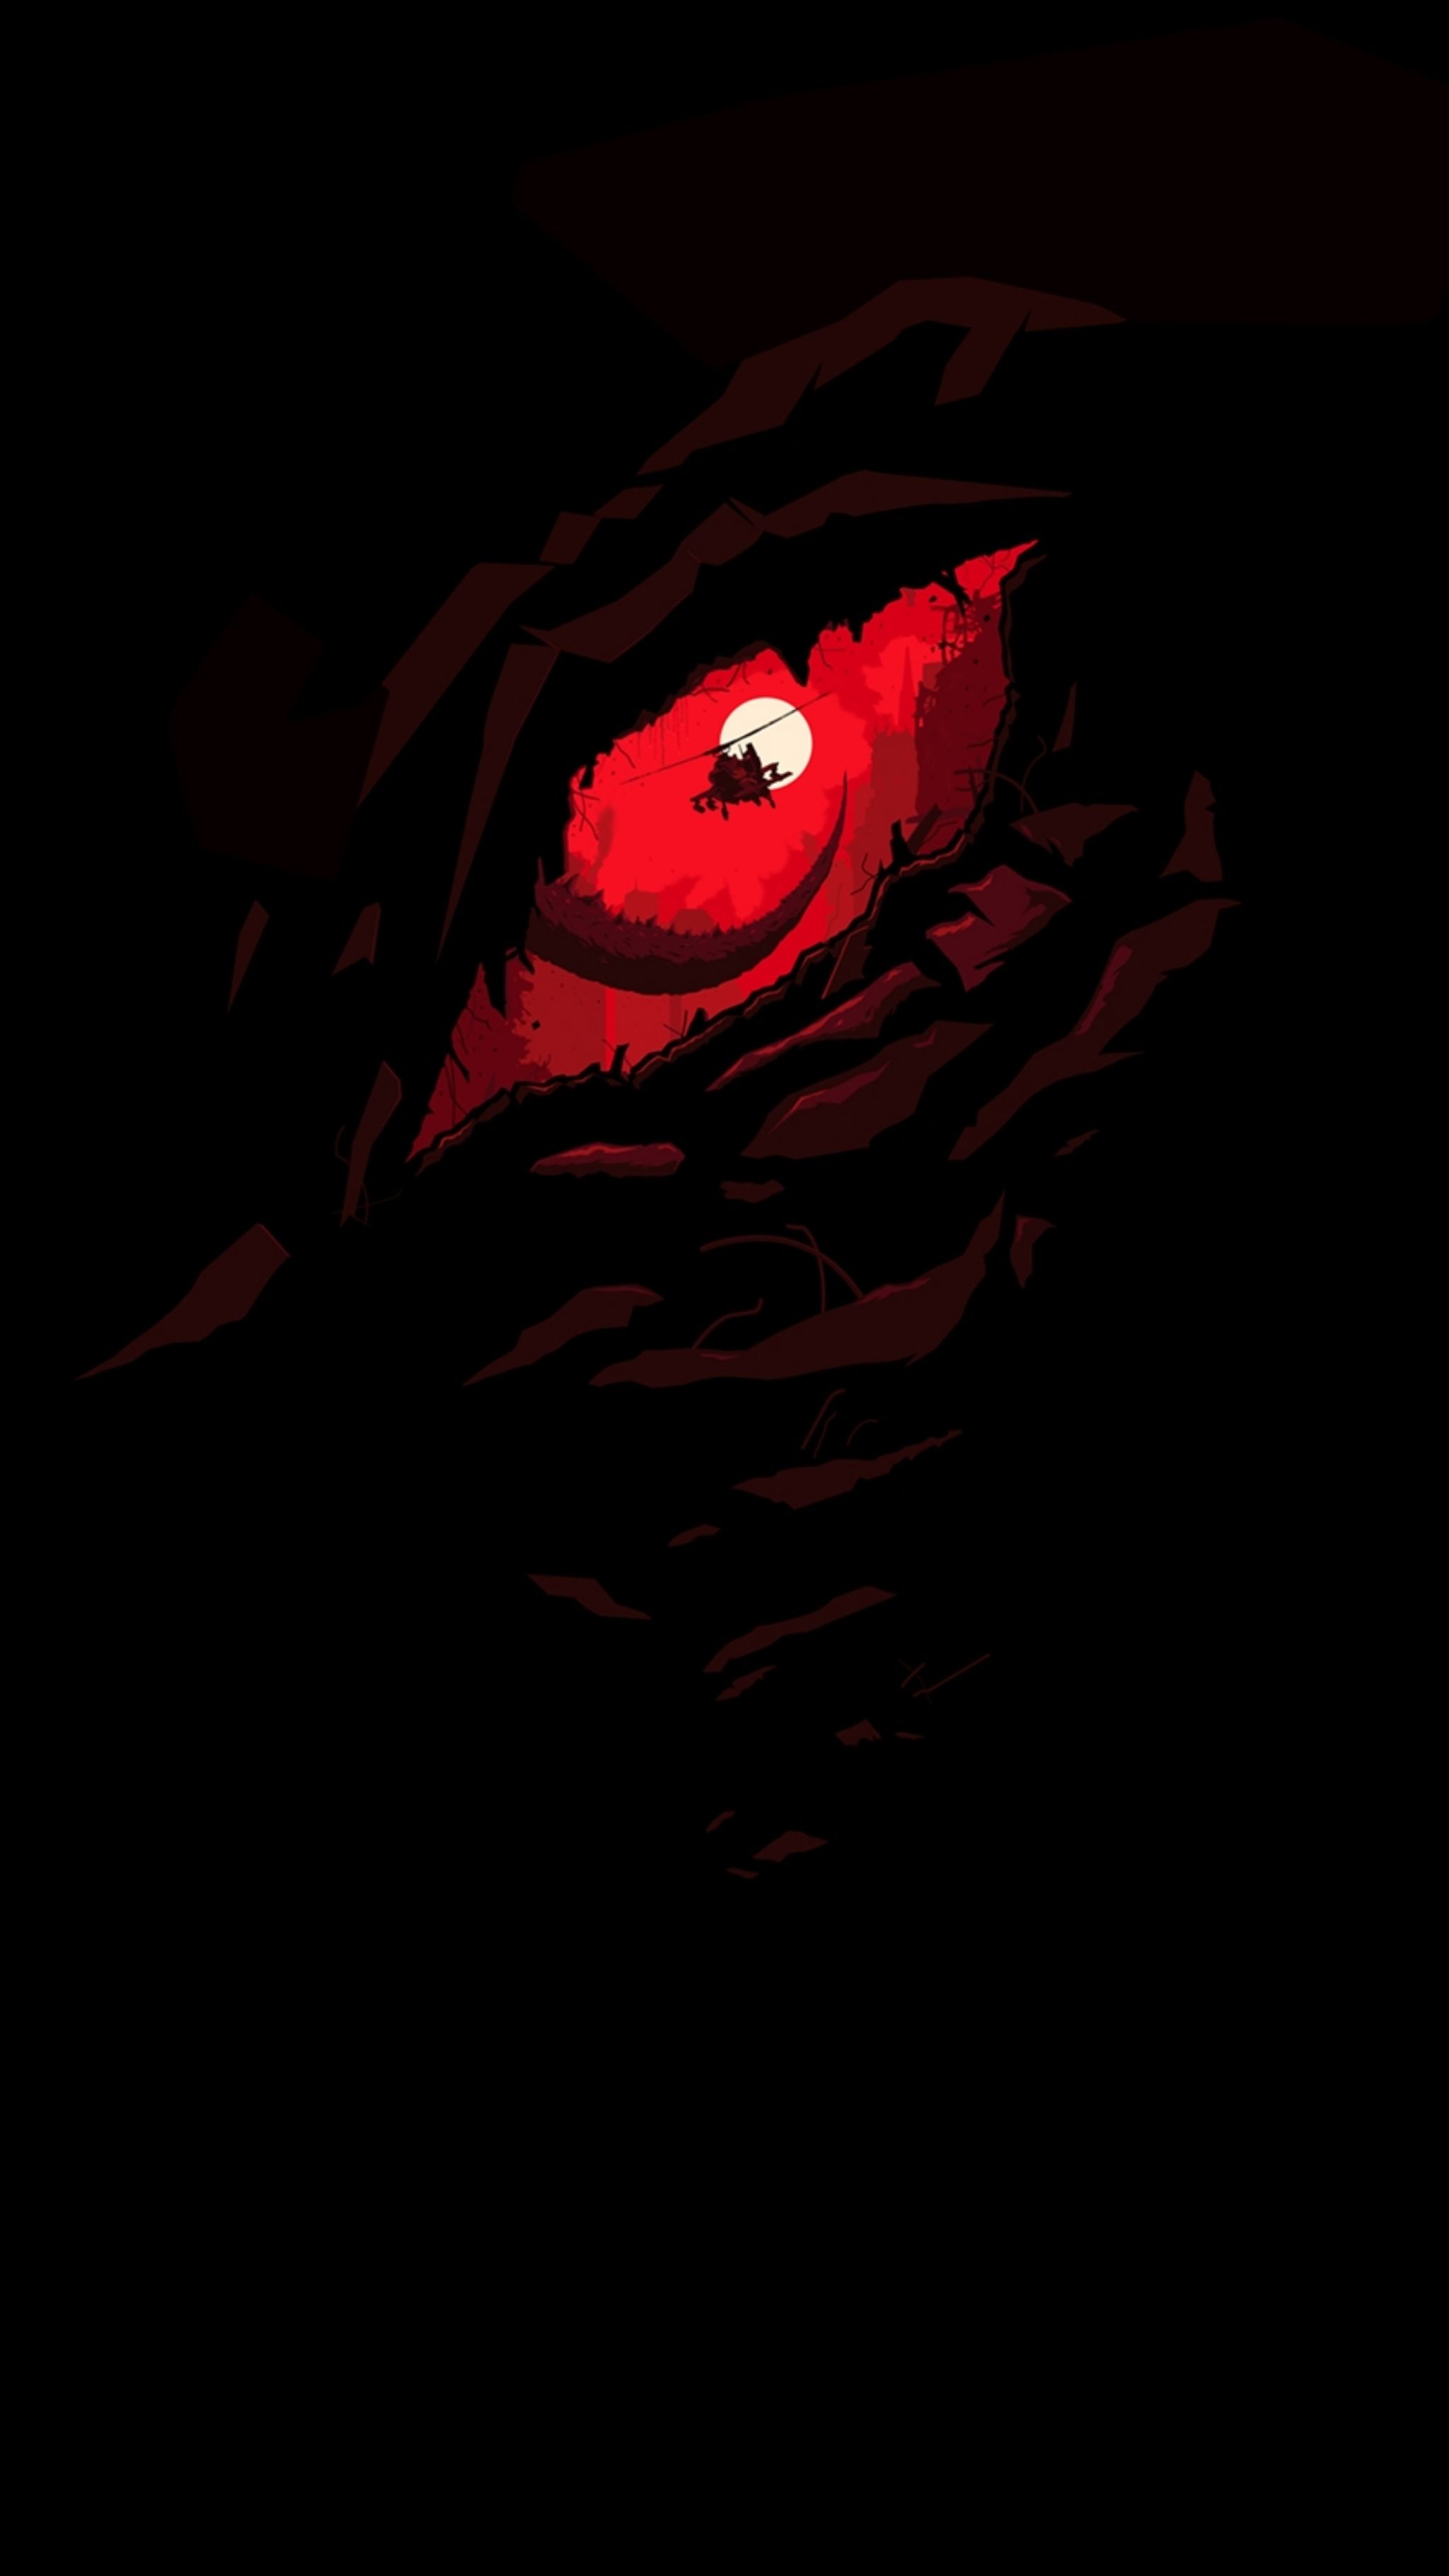 iPhone Wallpaper. Red, Black, Darkness, Eye, Organ, Lip